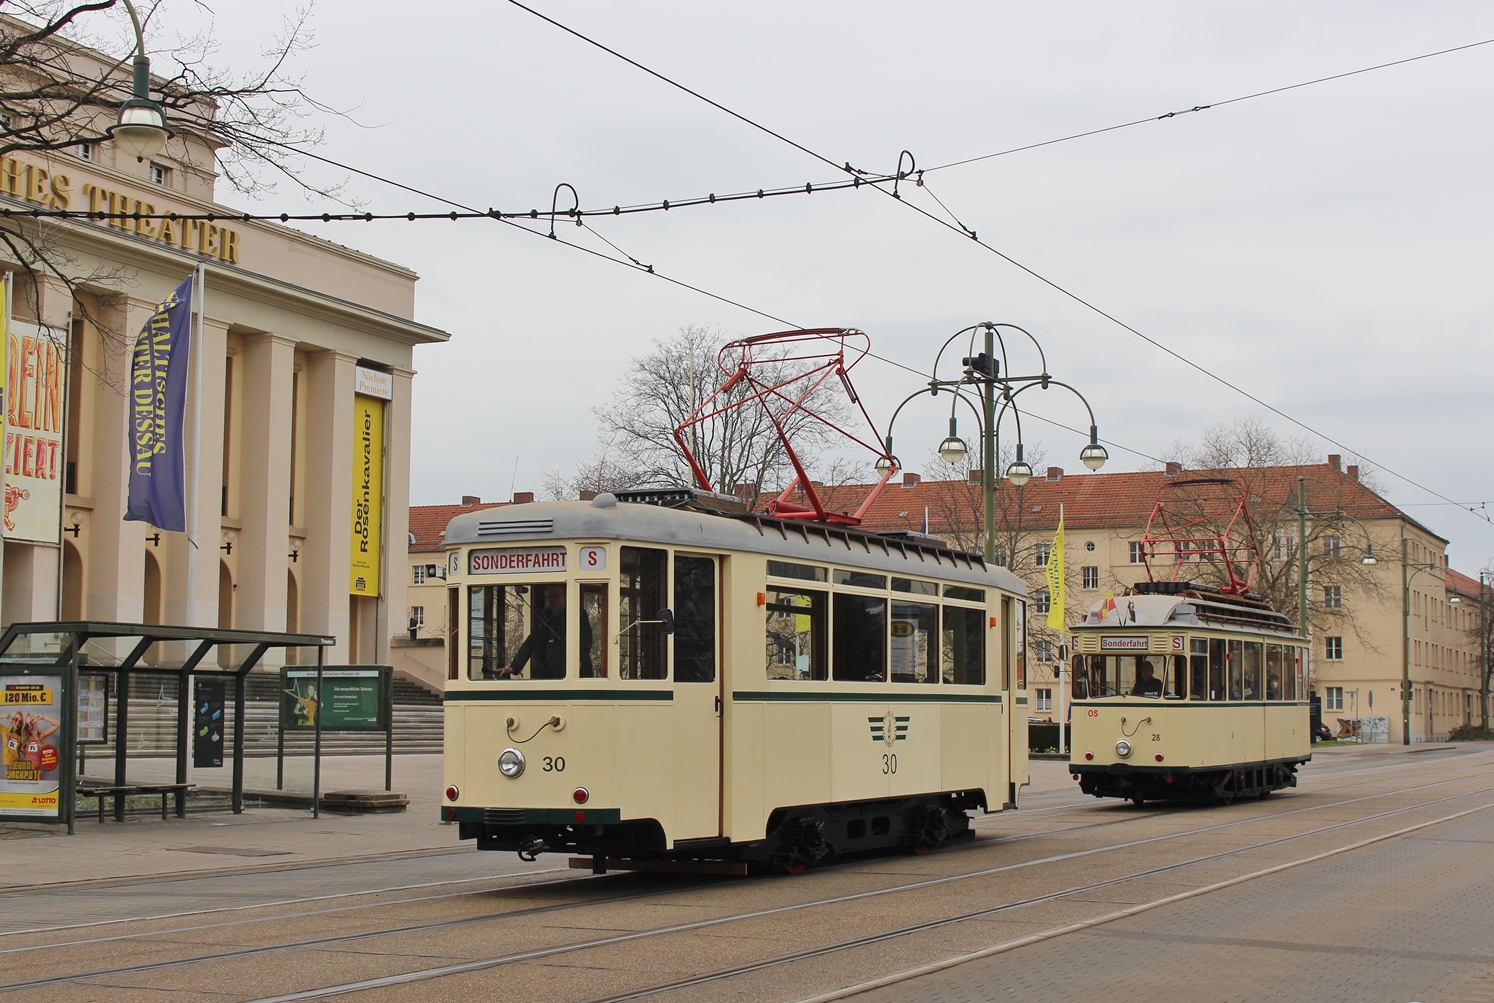 Miscellaneous 2-axle tram #30